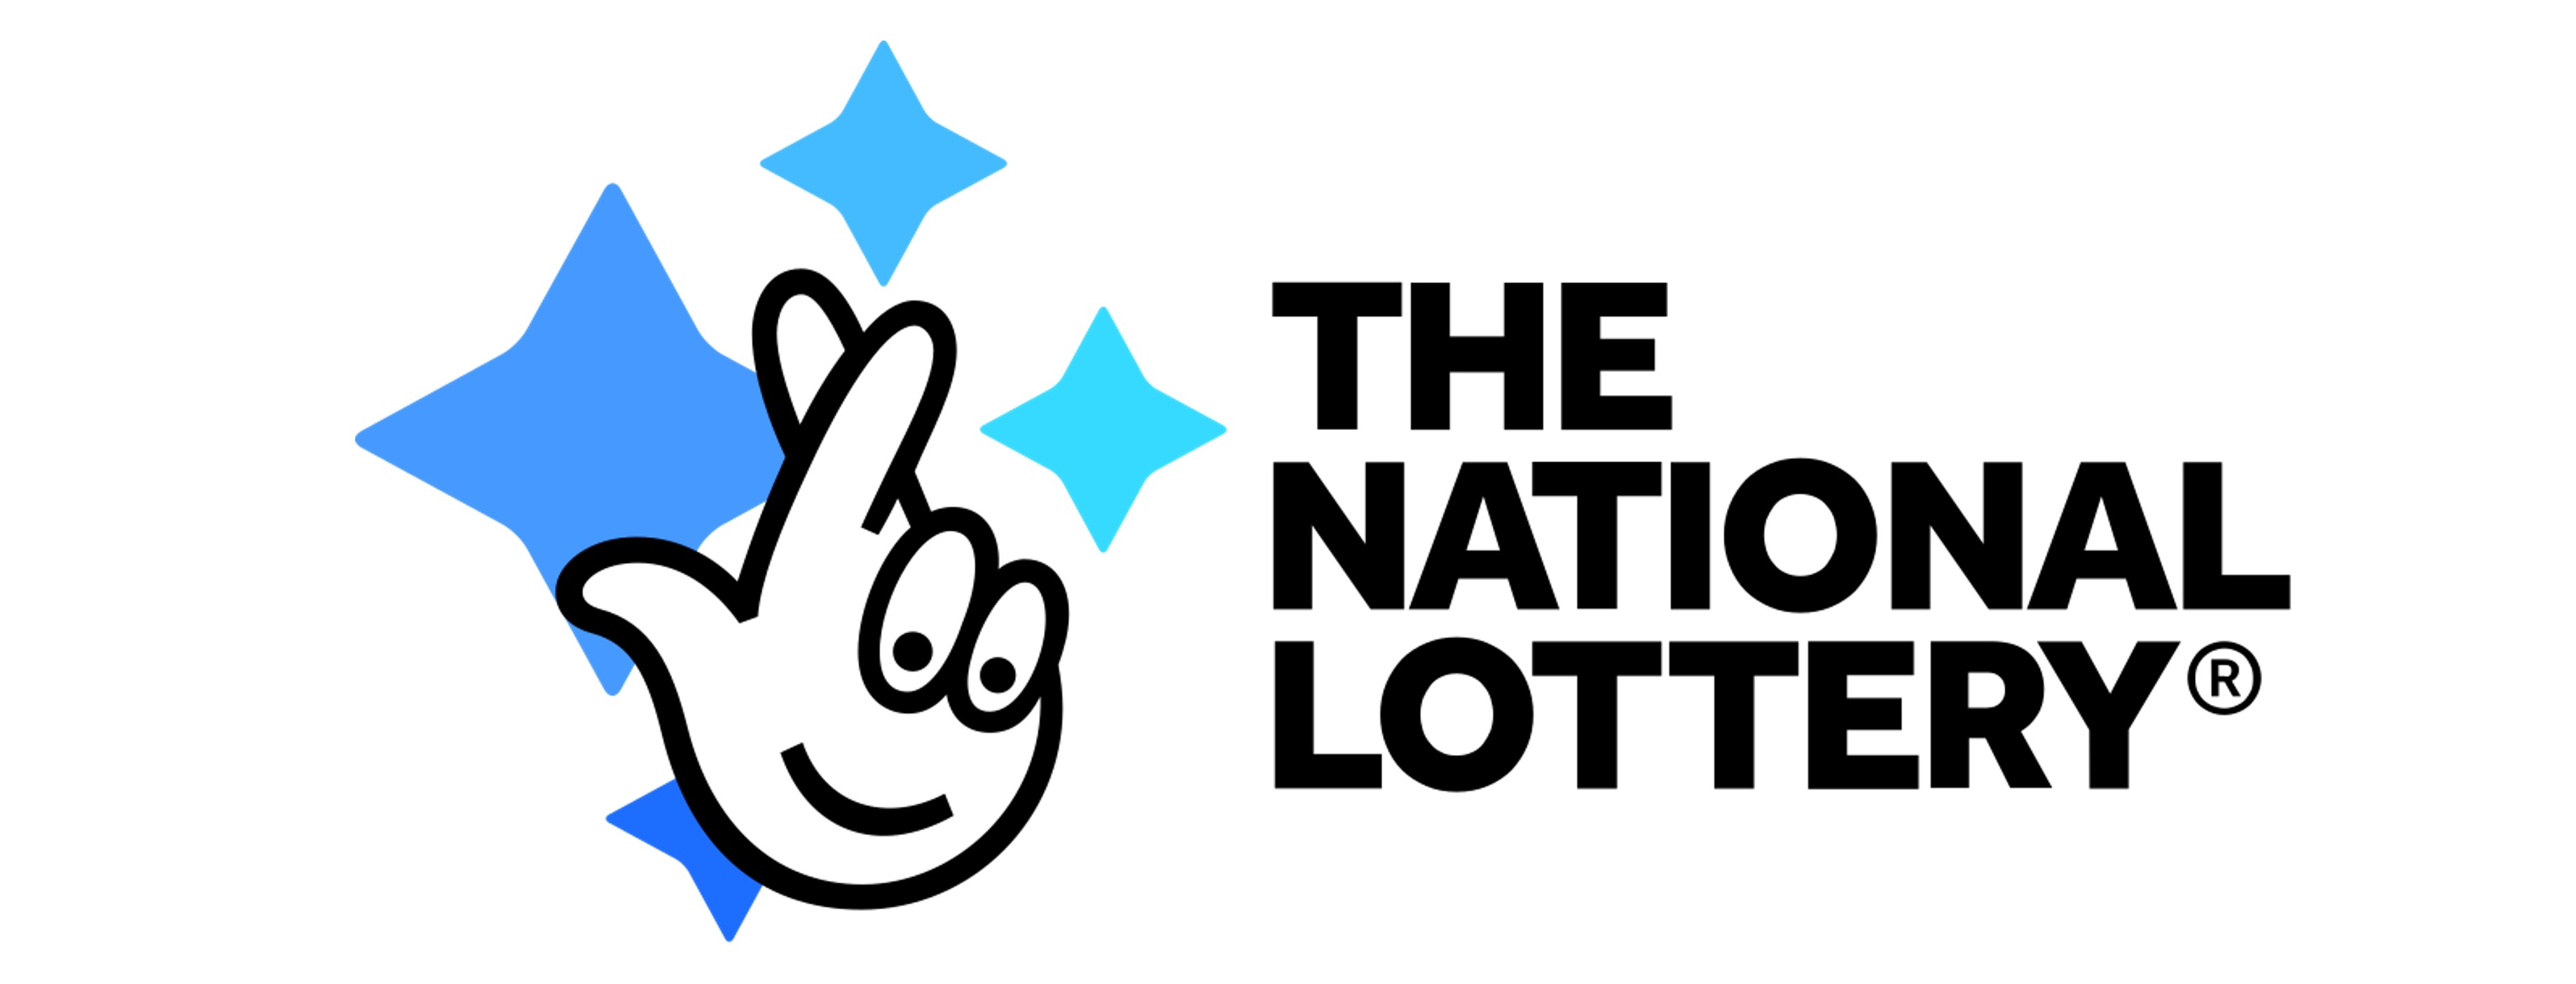 gc lottery logo